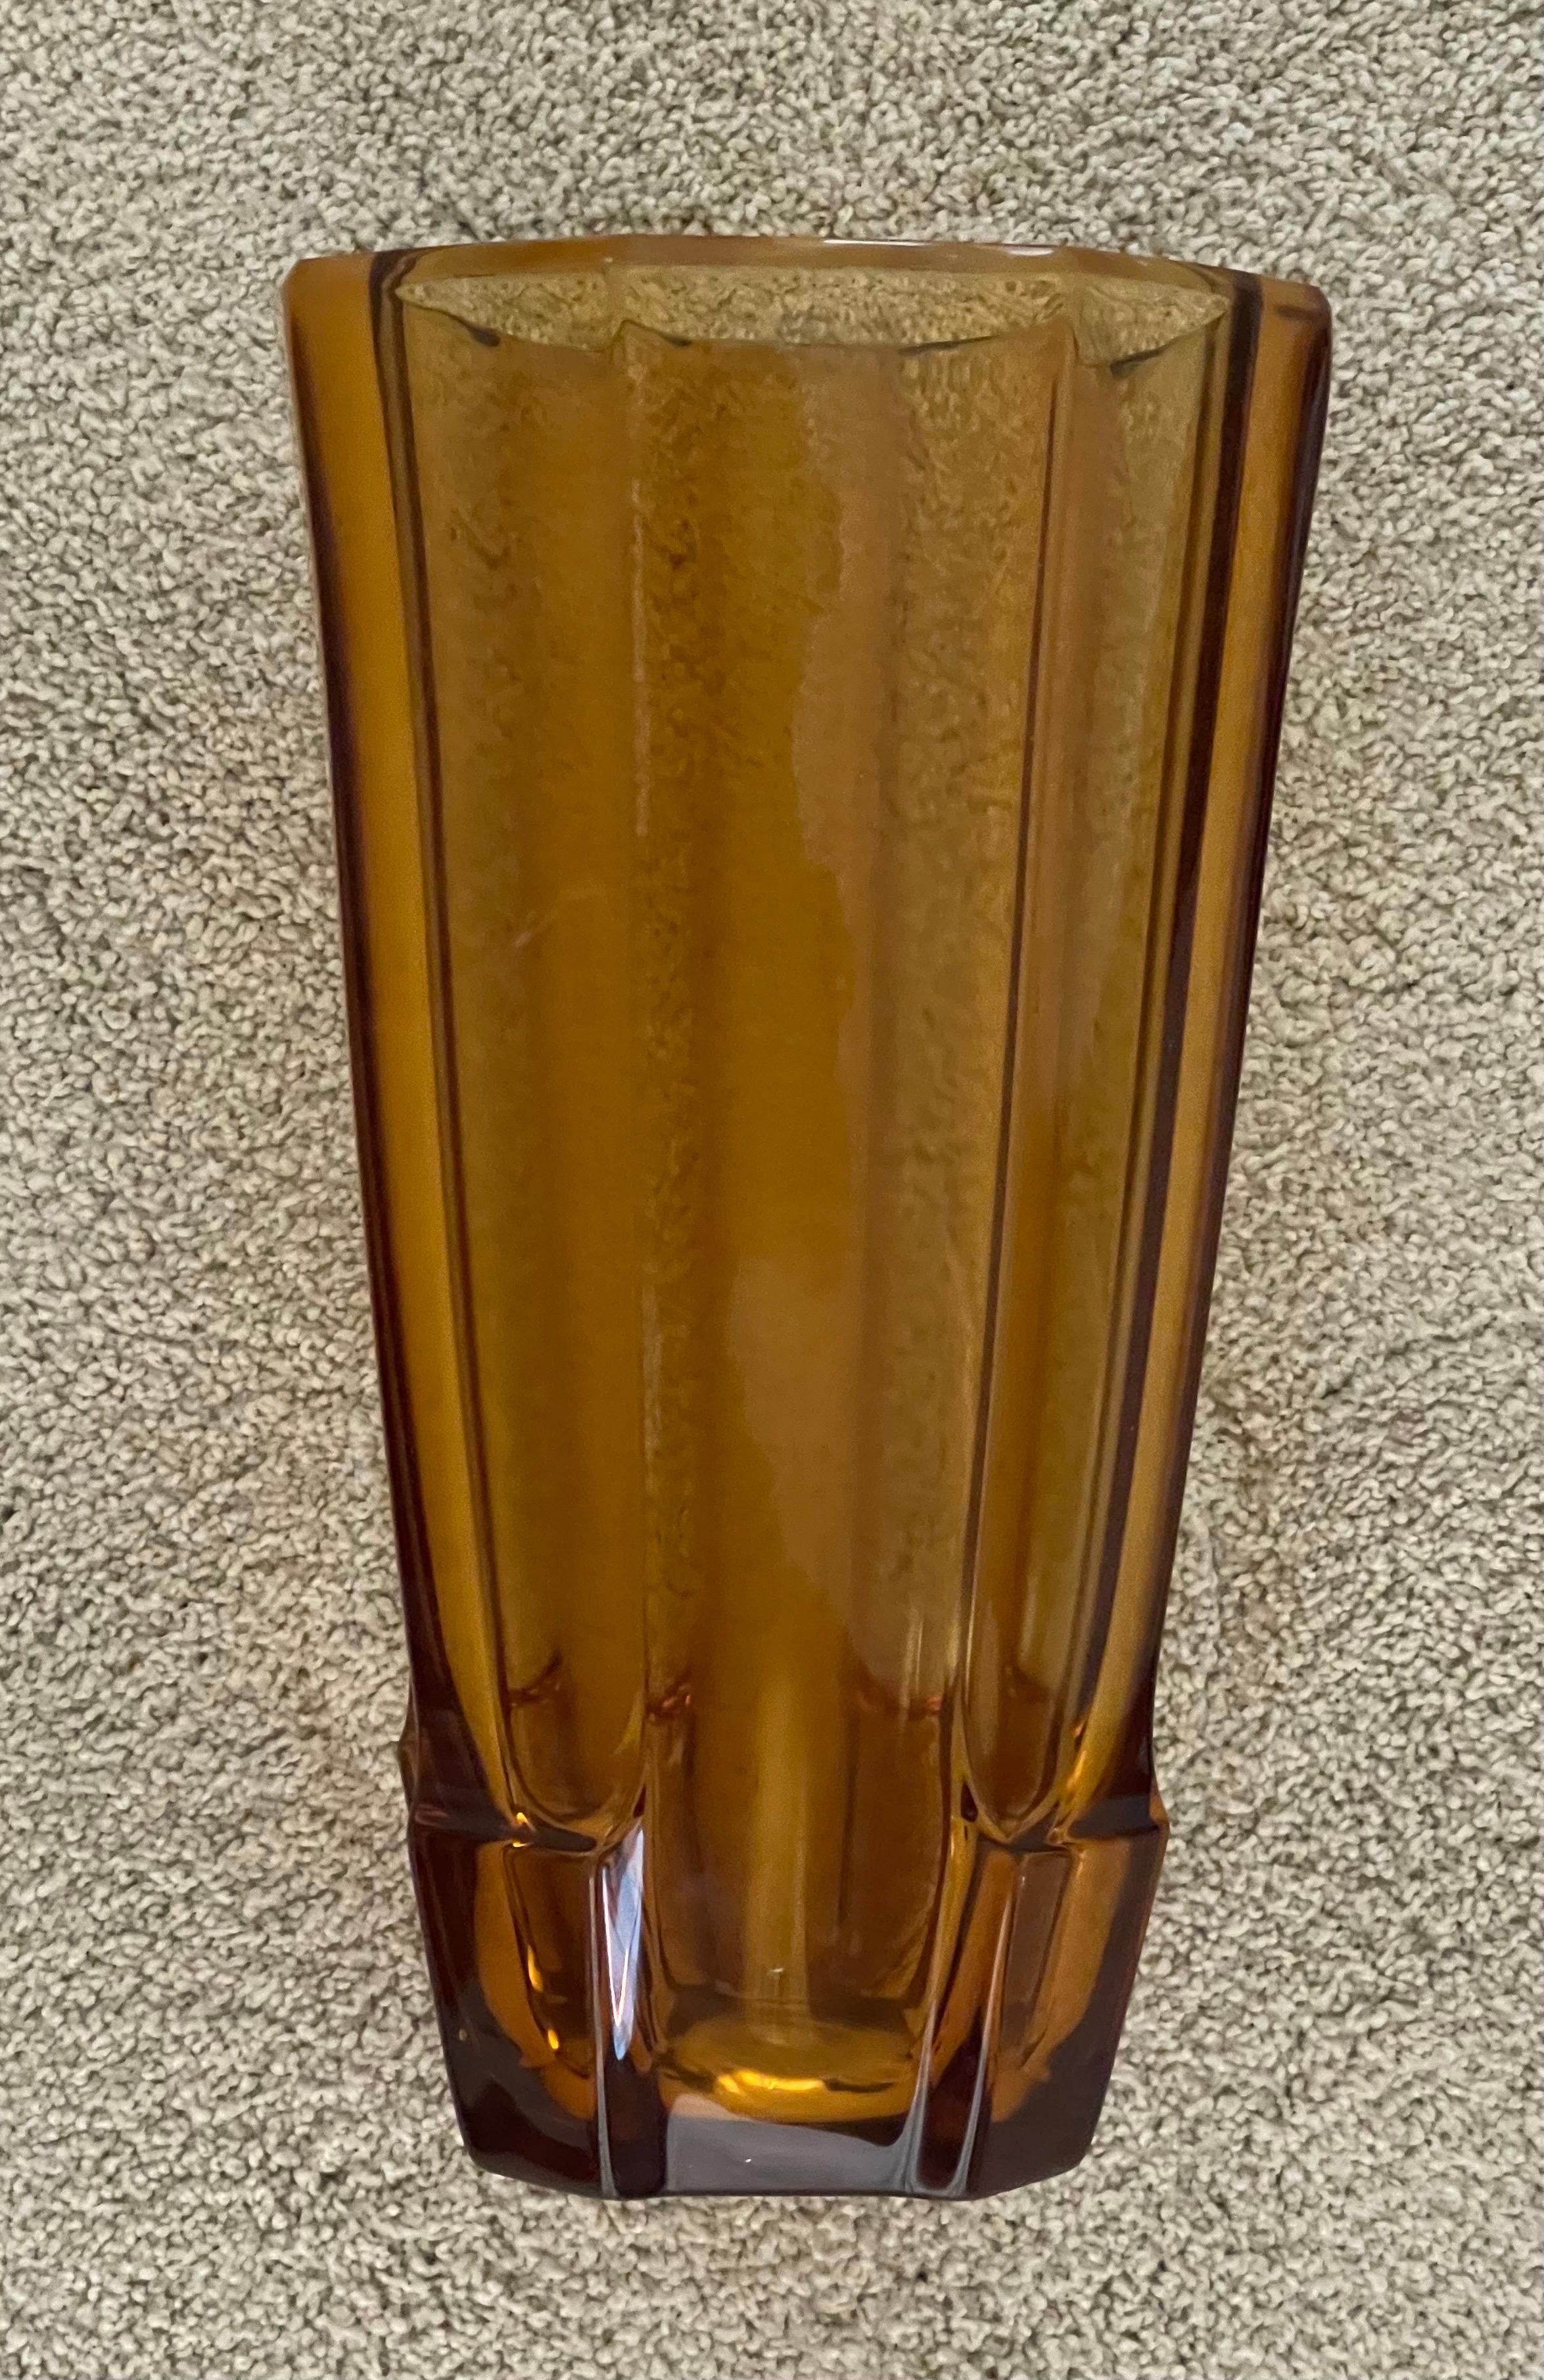 Large Art Deco Art Glass Faceted Vase by Josef Hoffmann for Moser Glassworks For Sale 1